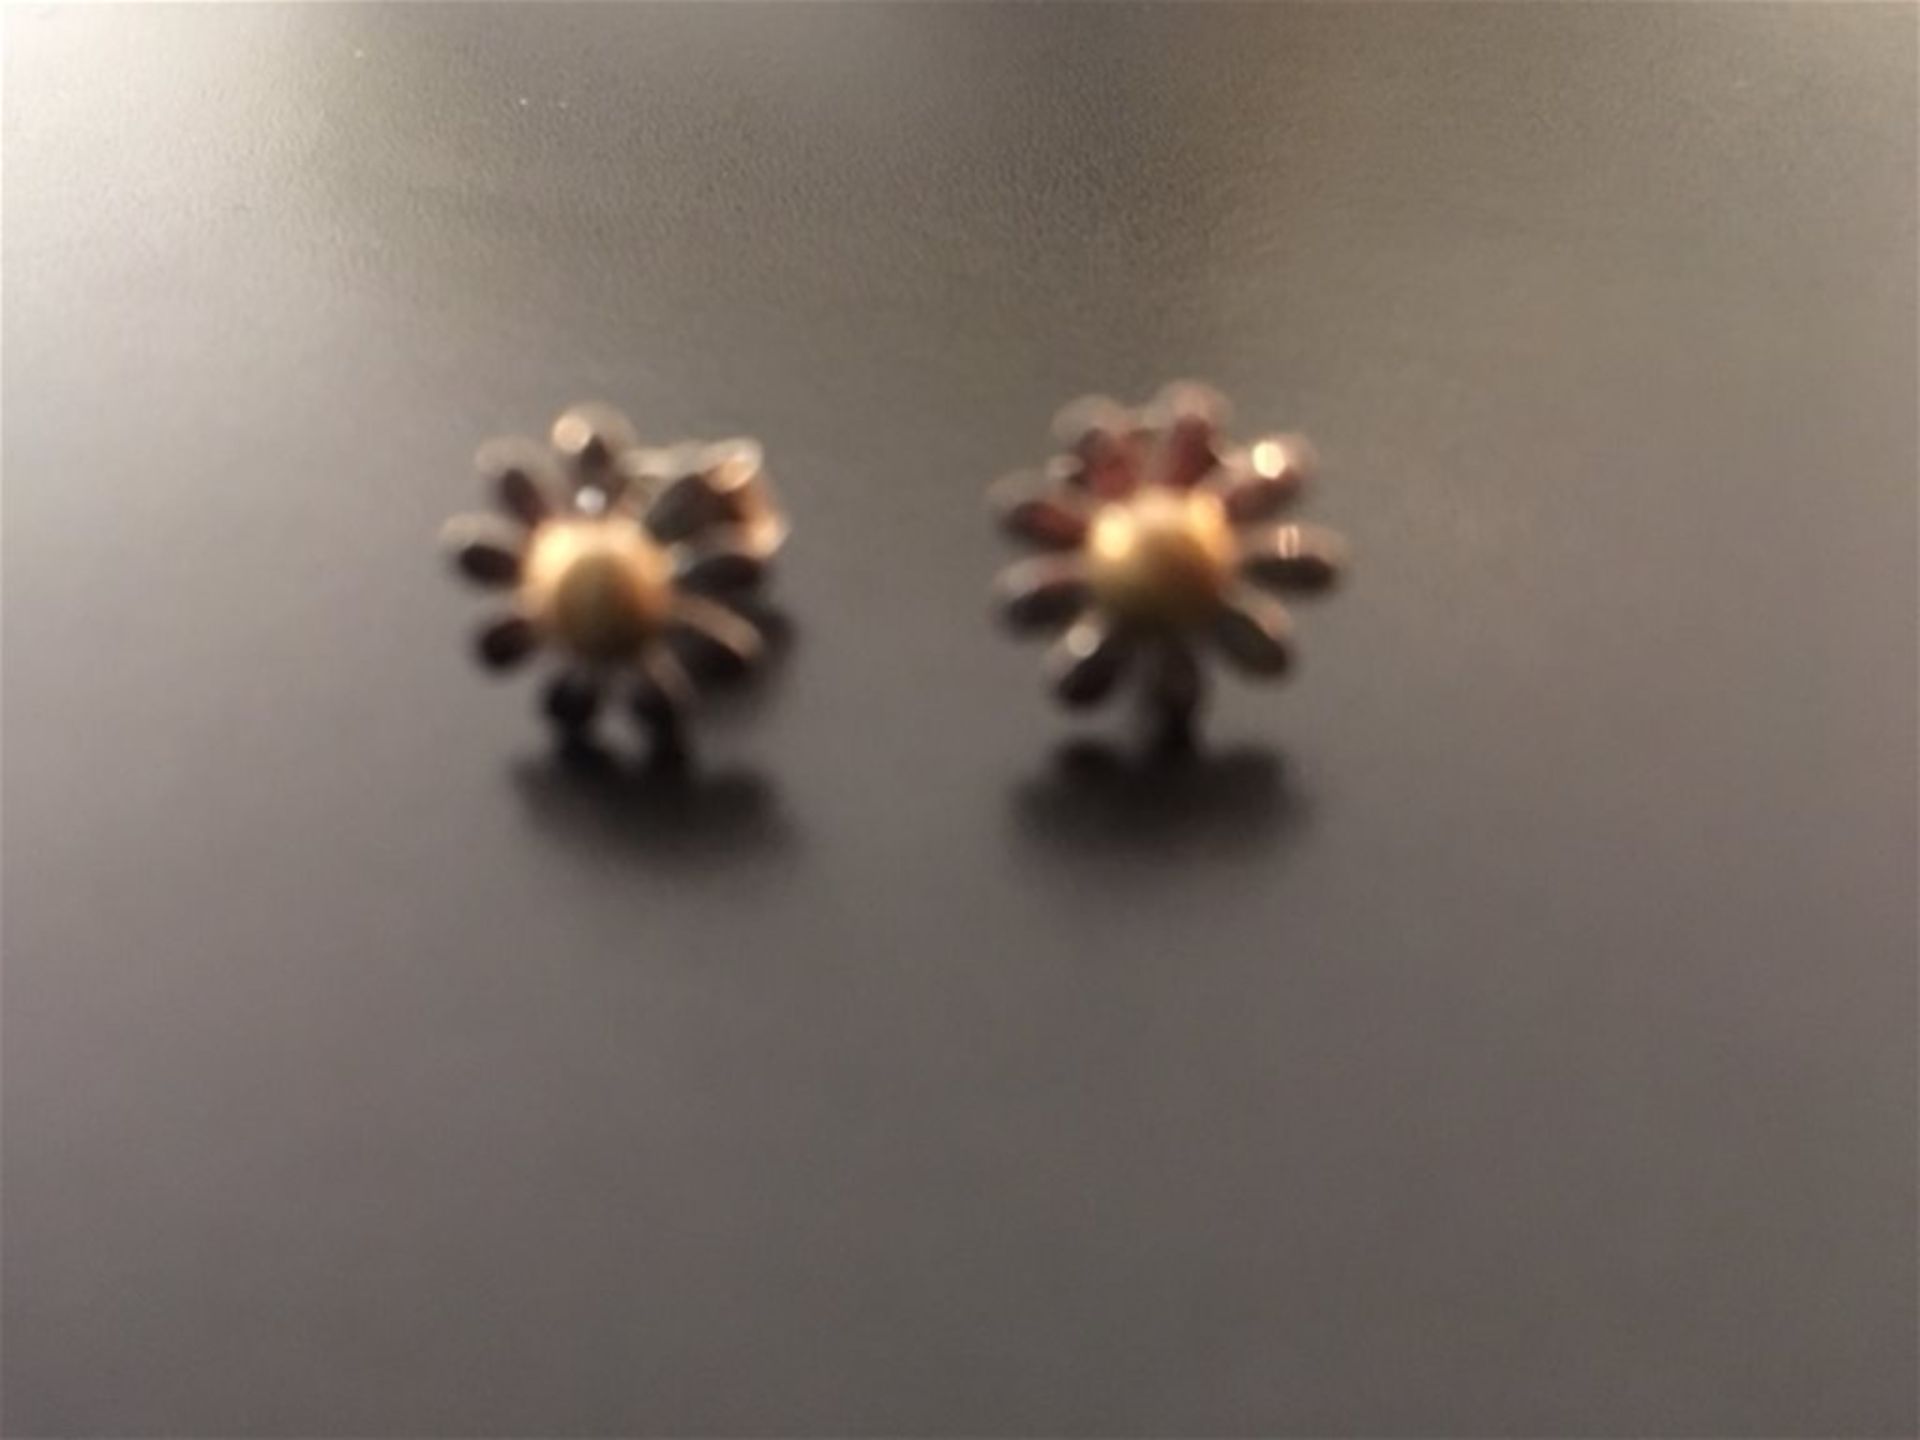 Silver/Gold plate sunflower earrings